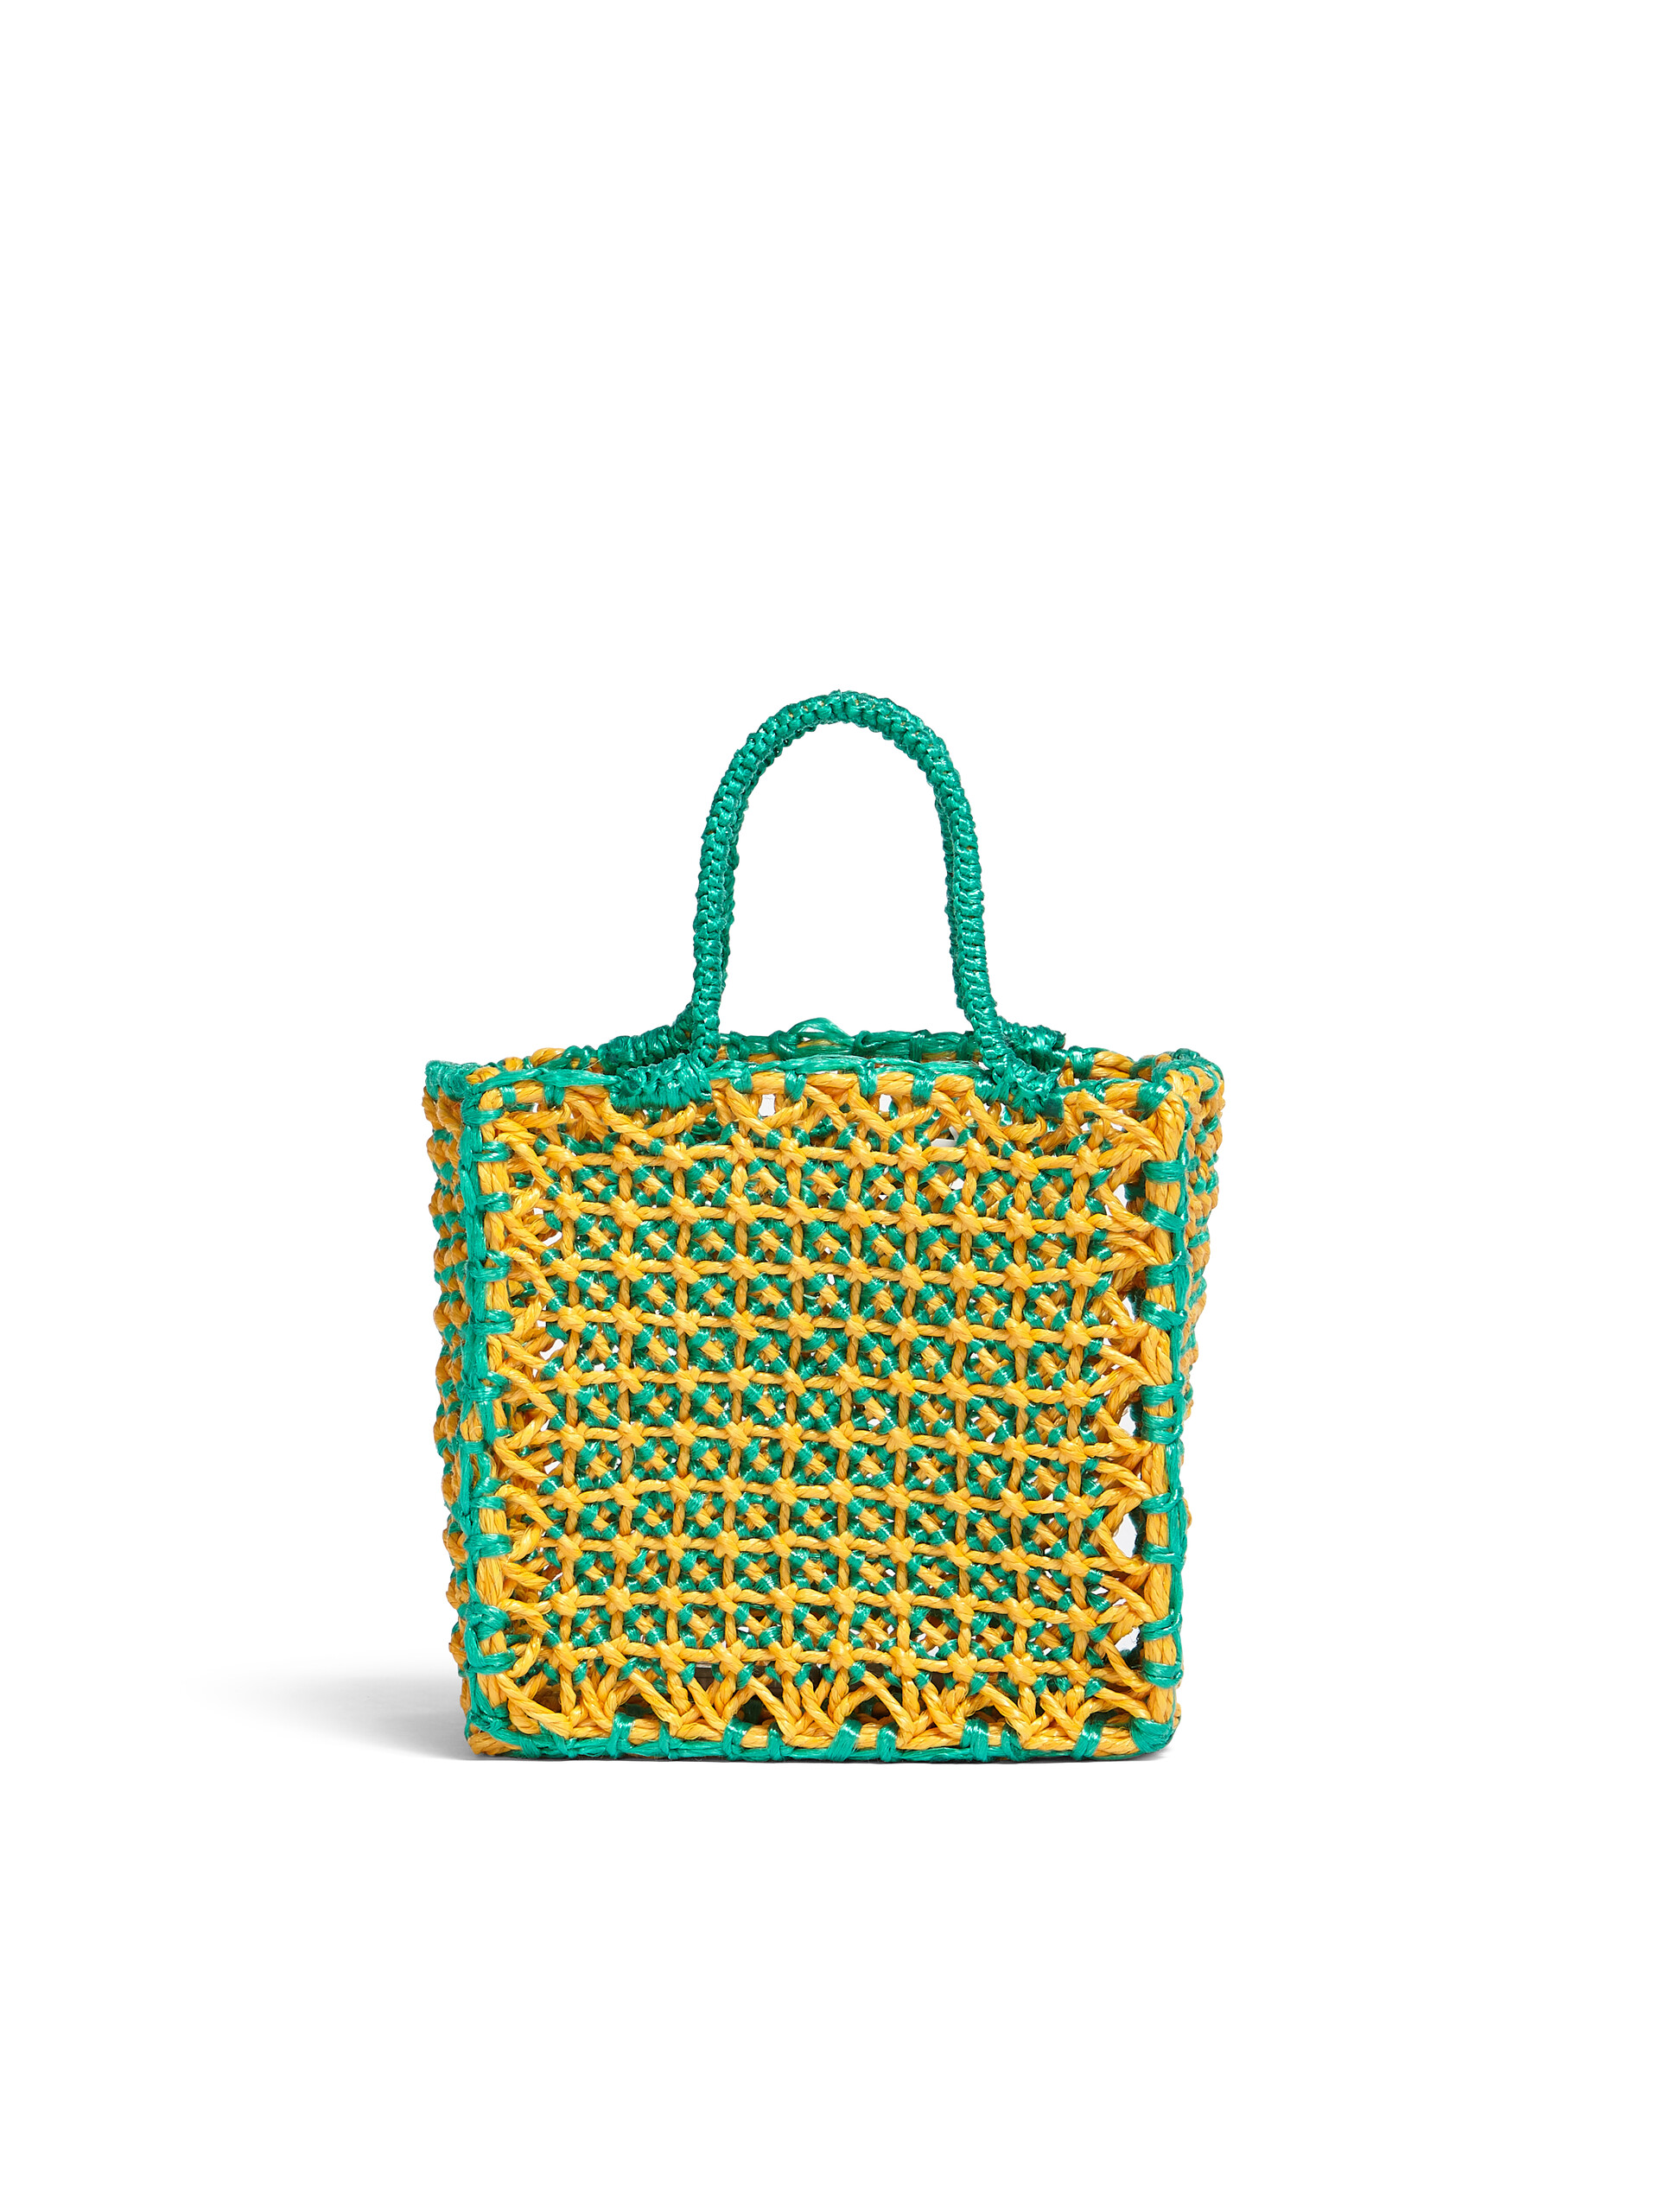 MARNI MARKET JURTA small bag in green and yellow crochet - Shopping Bags - Image 3